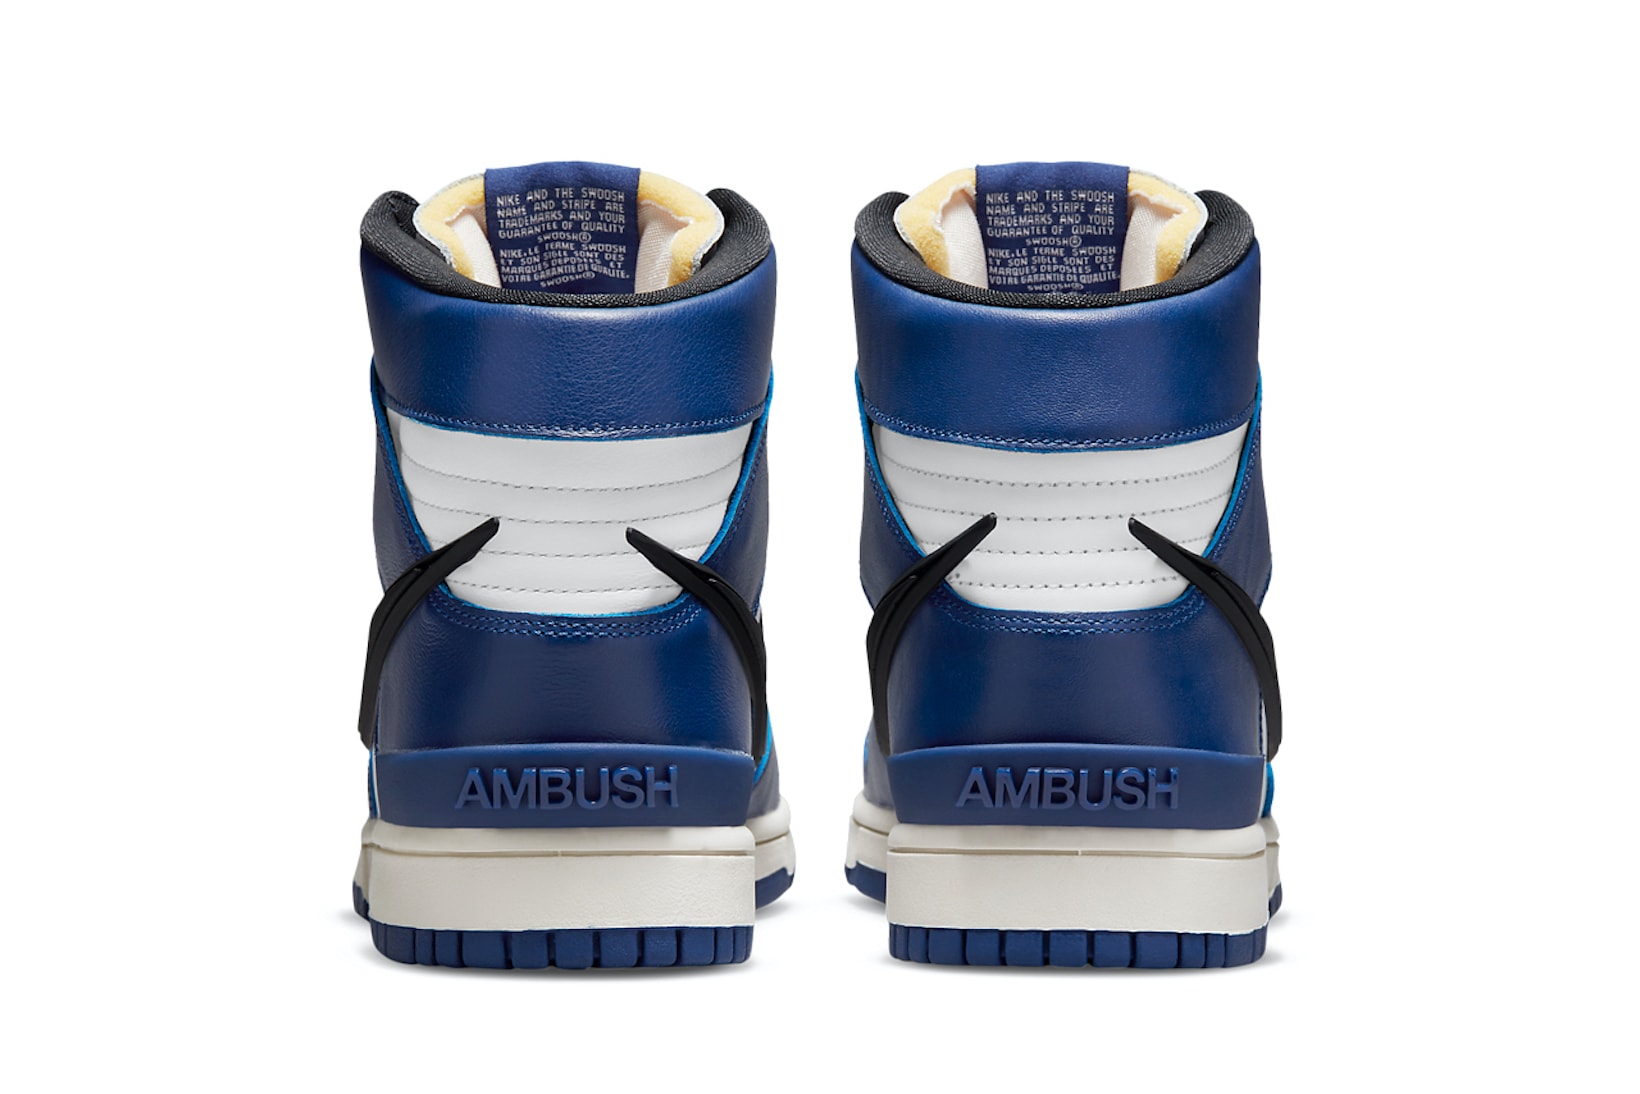 ambush nike yoon ahn dunk high deep royal blue collaboration sneakers shoes footwear kicks heel